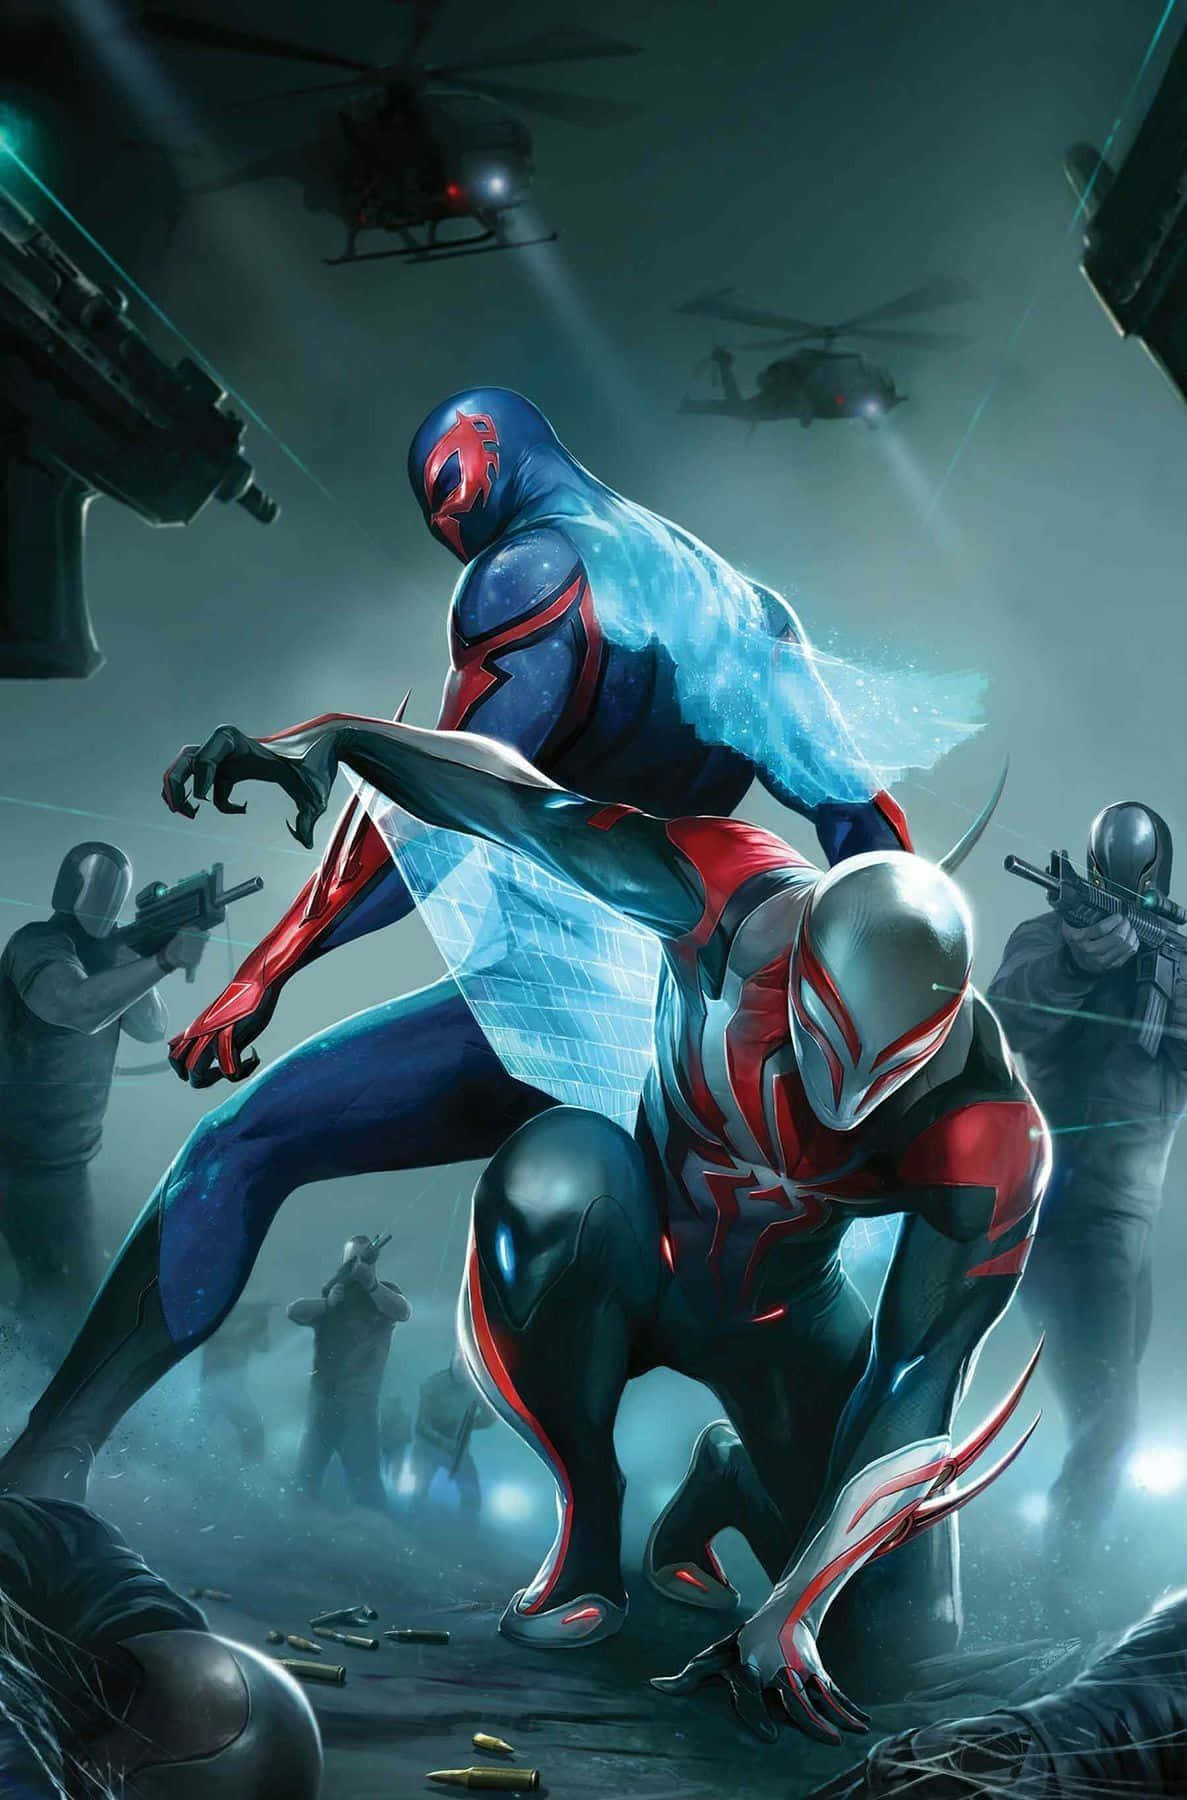 Spider-Man 2099 Swinging in Action Wallpaper